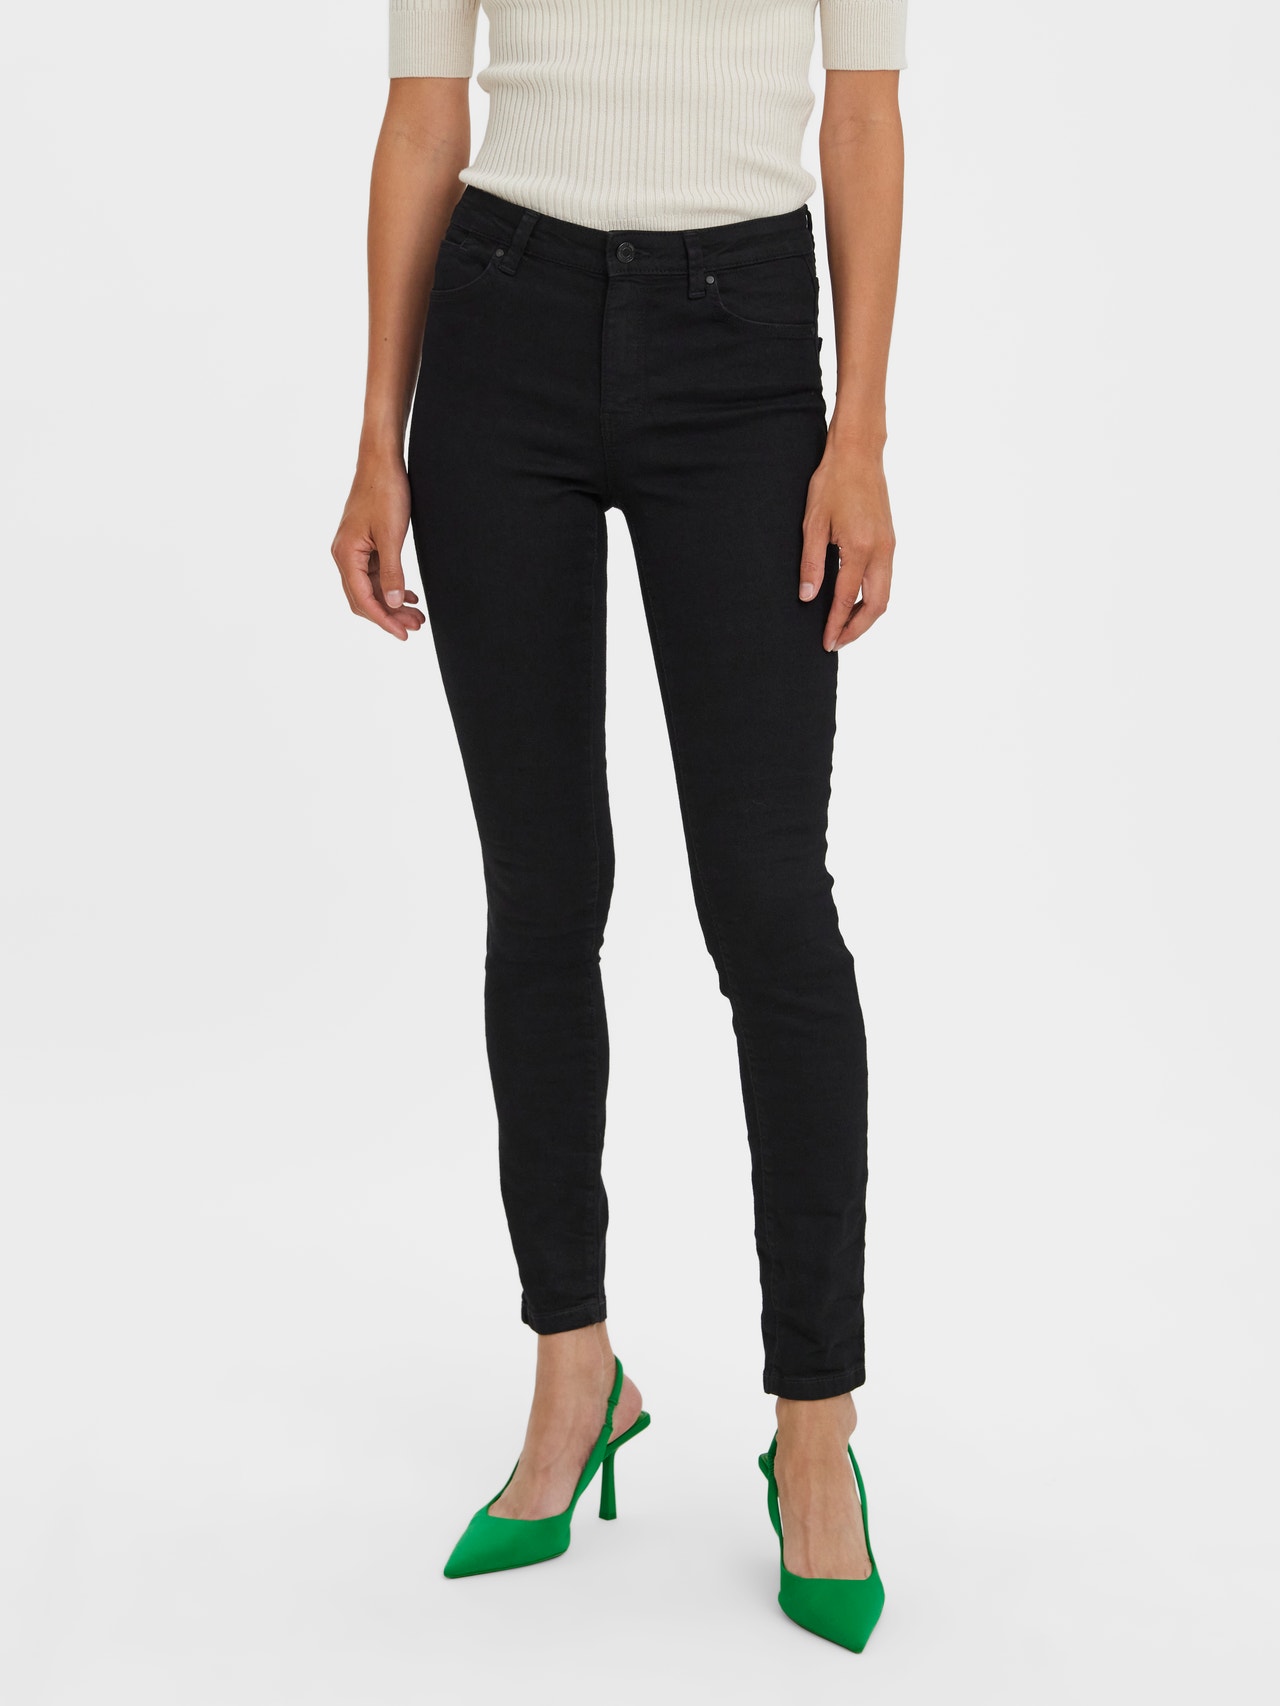 Vero Moda VMFLEX-IT Taille moyenne Skinny Fit Jeans -Black - 10282223